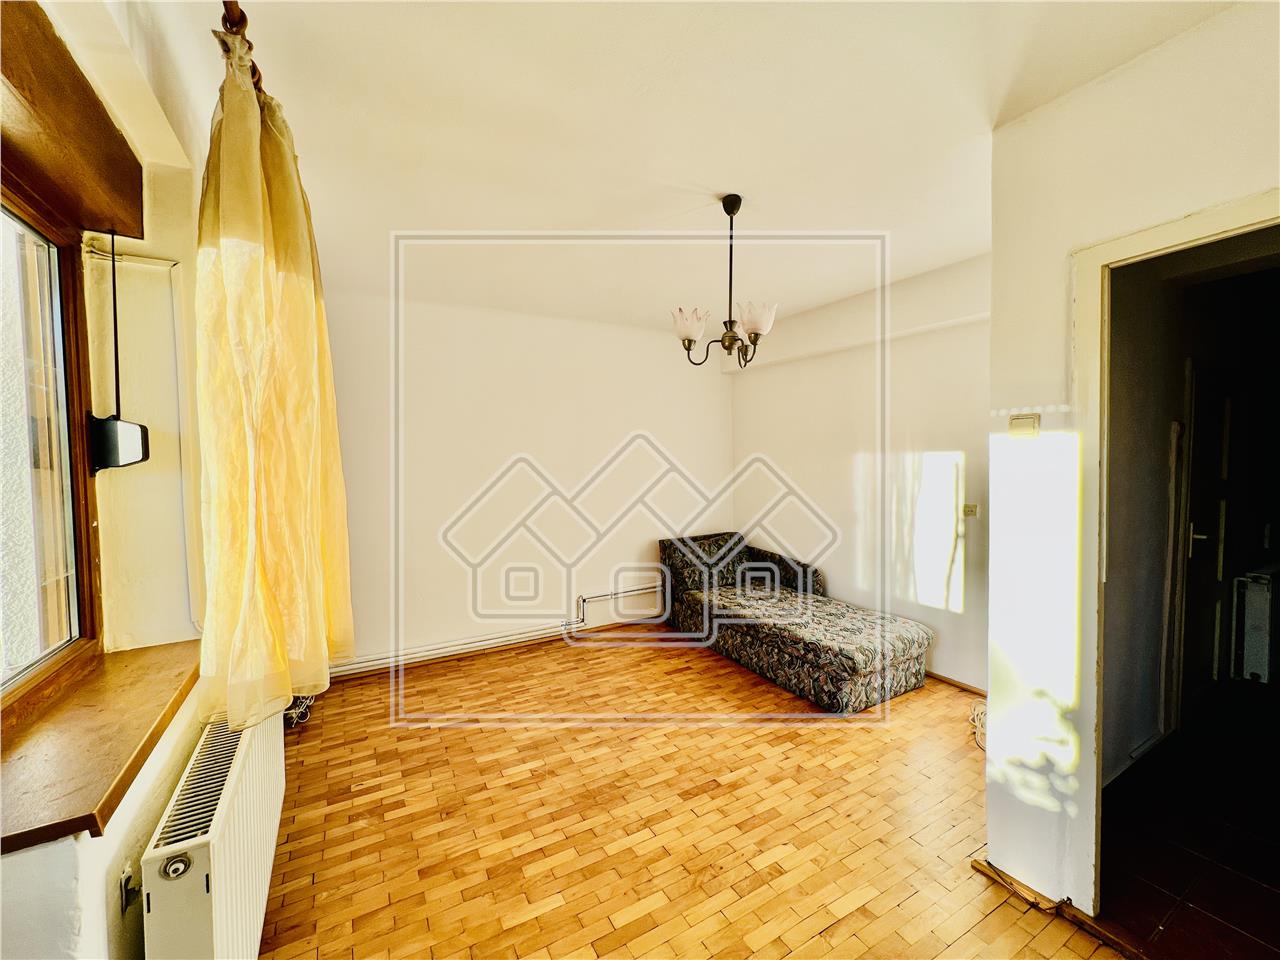 Apartament 2 rooms for sale in Sibiu